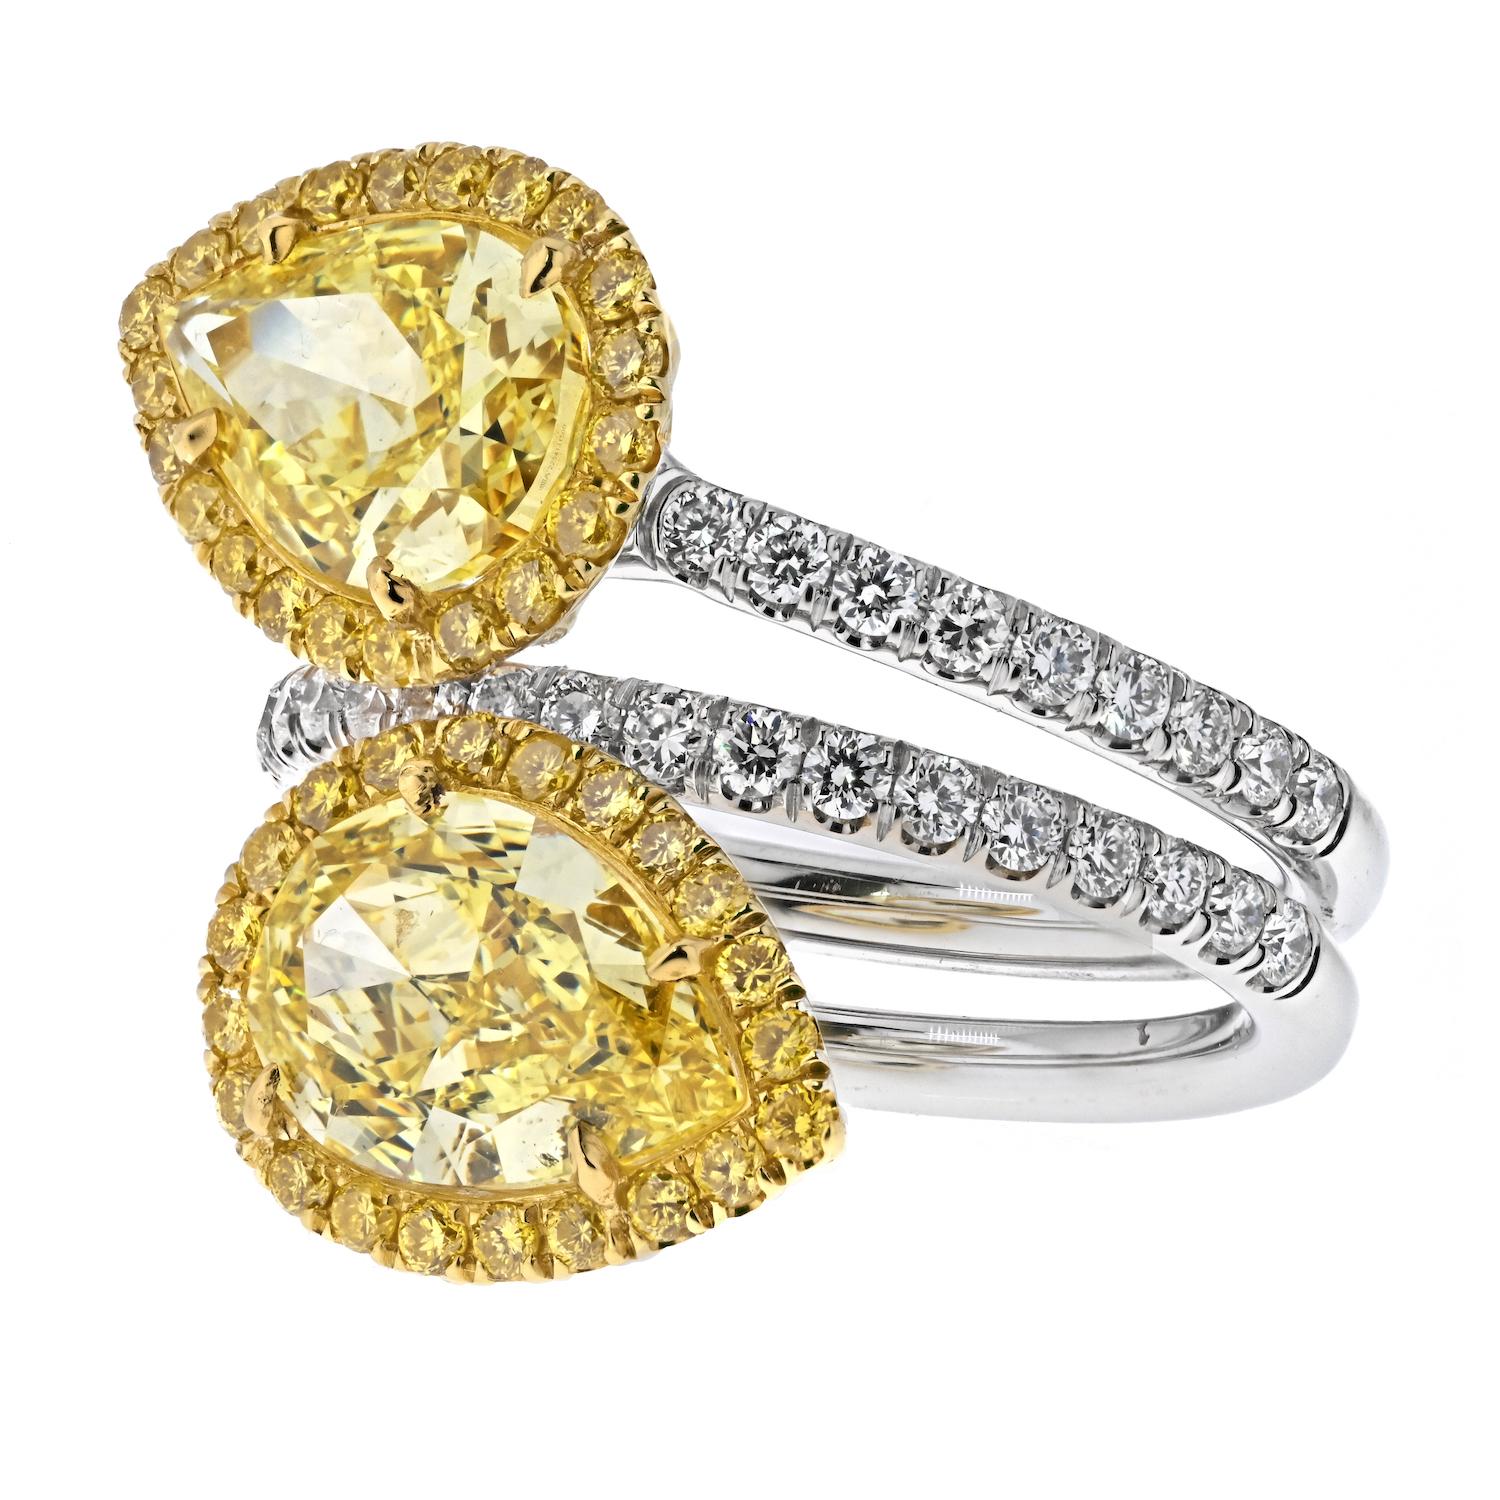 Modern 4.01cttw Fancy Yellow Intense Two Stone Pear Cut Diamond Ring GIA Certified